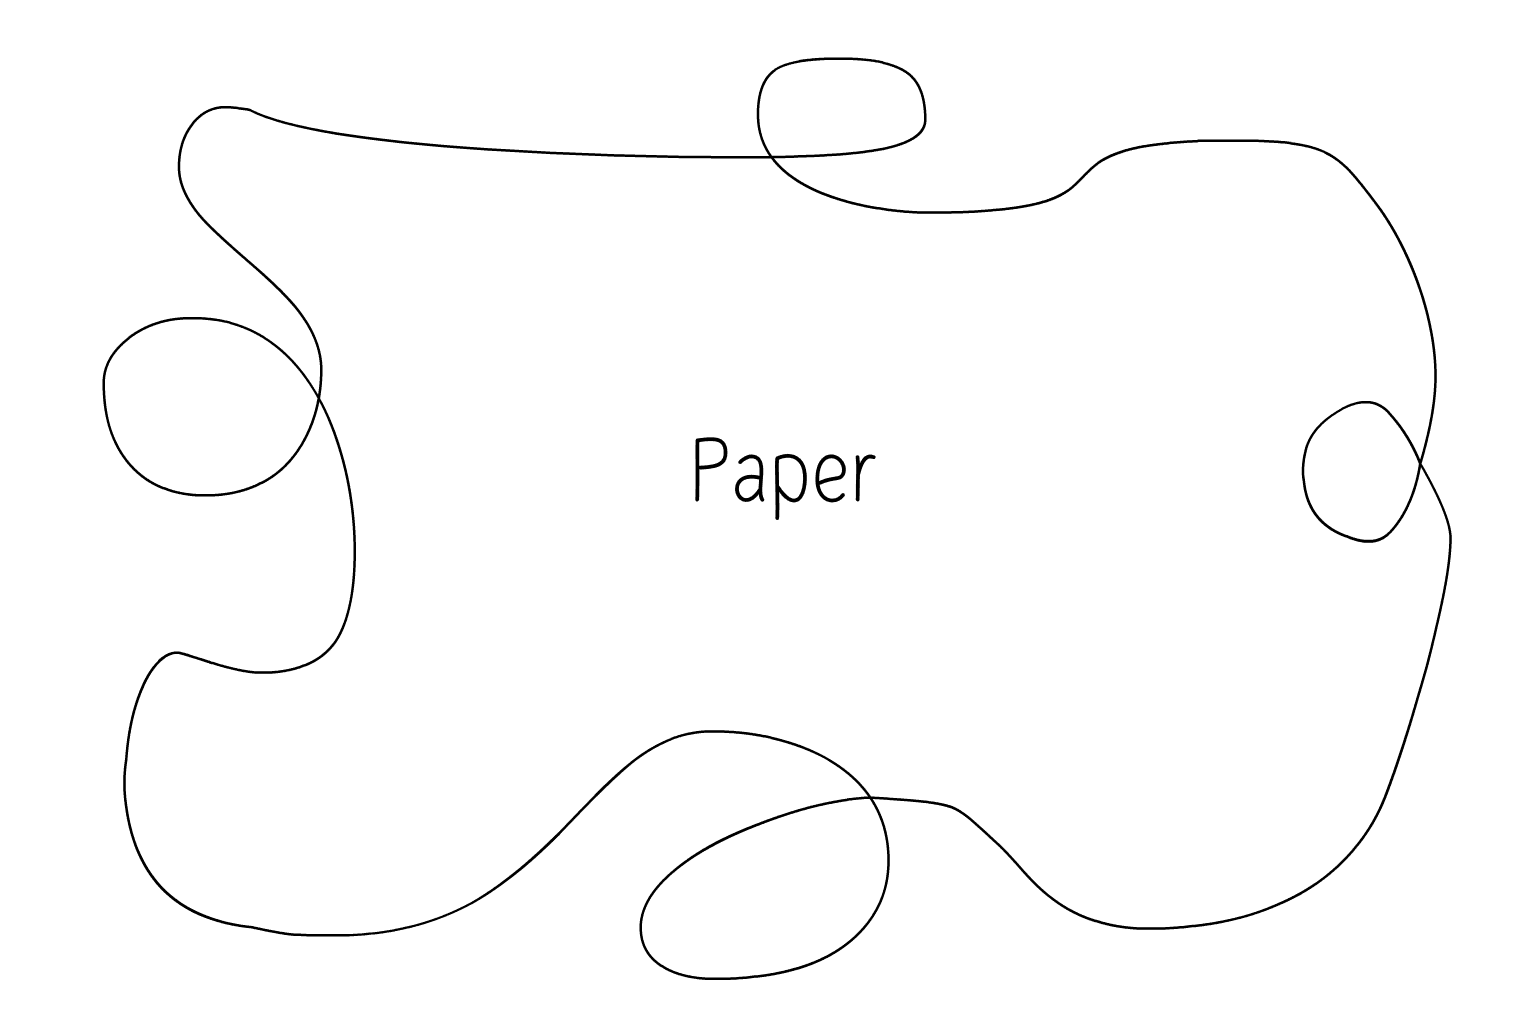 Illustration of Wedding Paper Goods Near